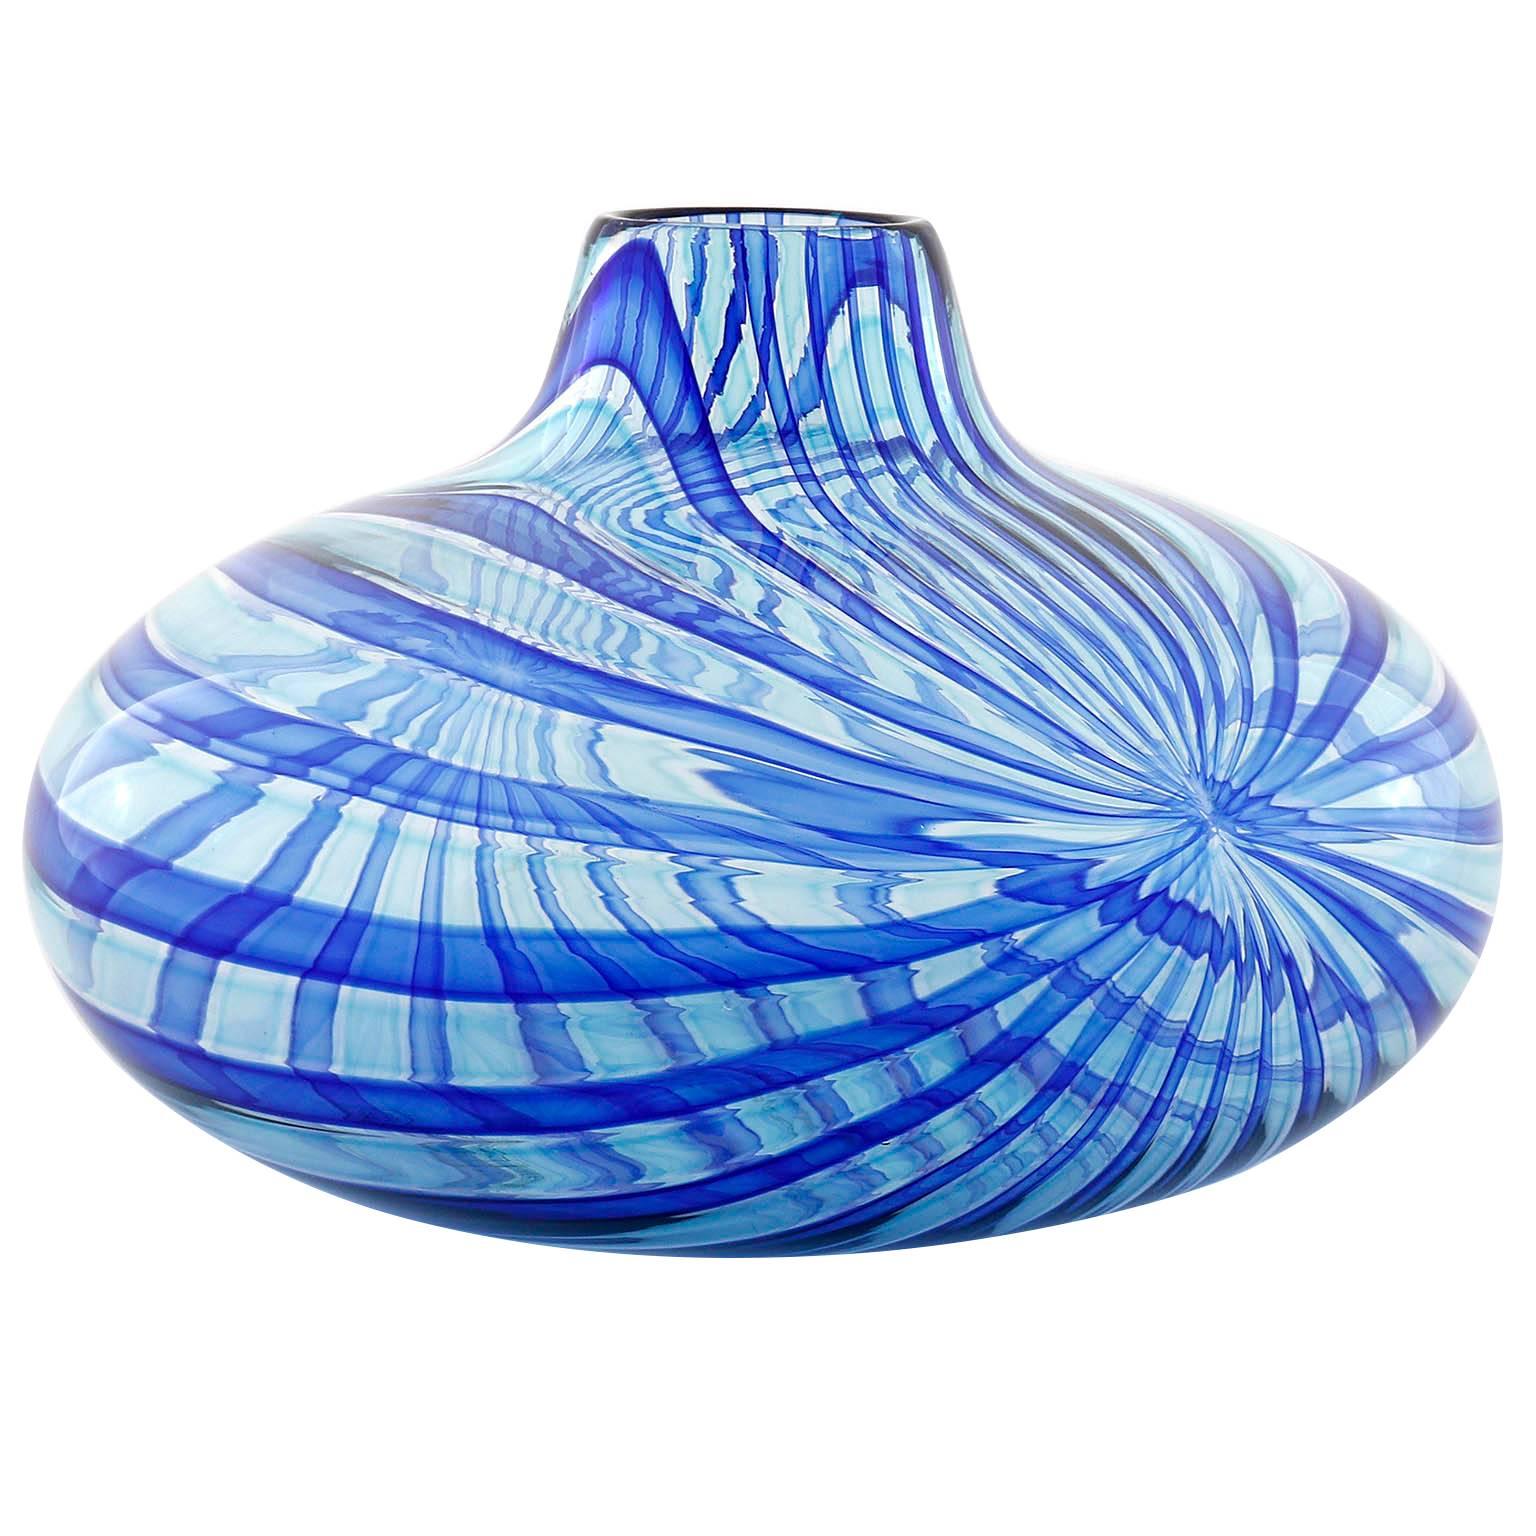 Blue Glass Vase 'Samarcanda' Lino Tagliapietra Effetre International, Italy 1986